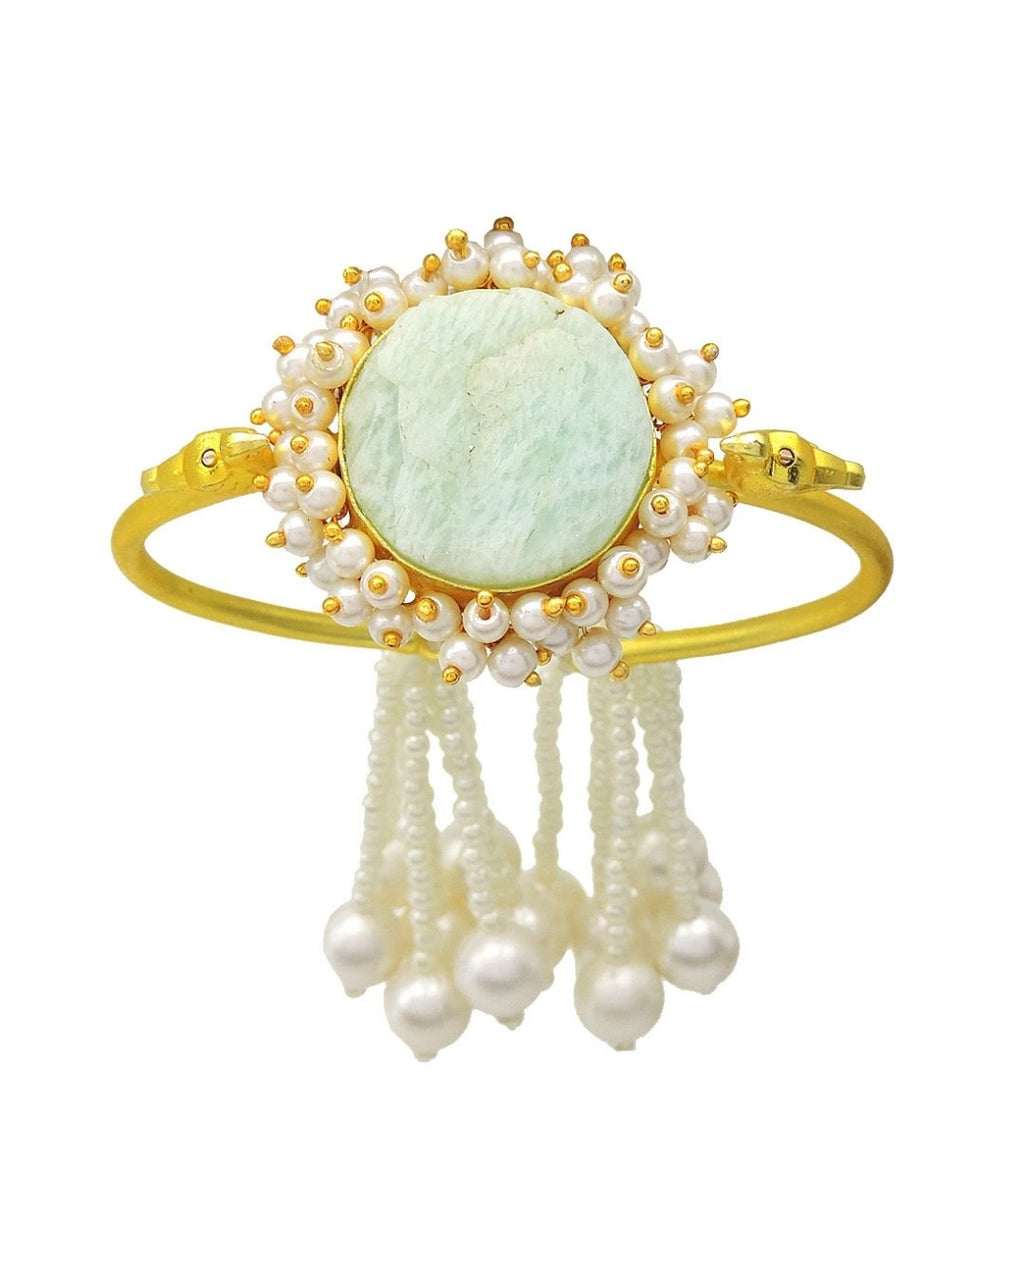 Bloom Tassel Cuff (Amazonite) - Bracelets & Cuffs - Handcrafted Jewellery - Made in India - Dubai Jewellery, Fashion & Lifestyle - Dori